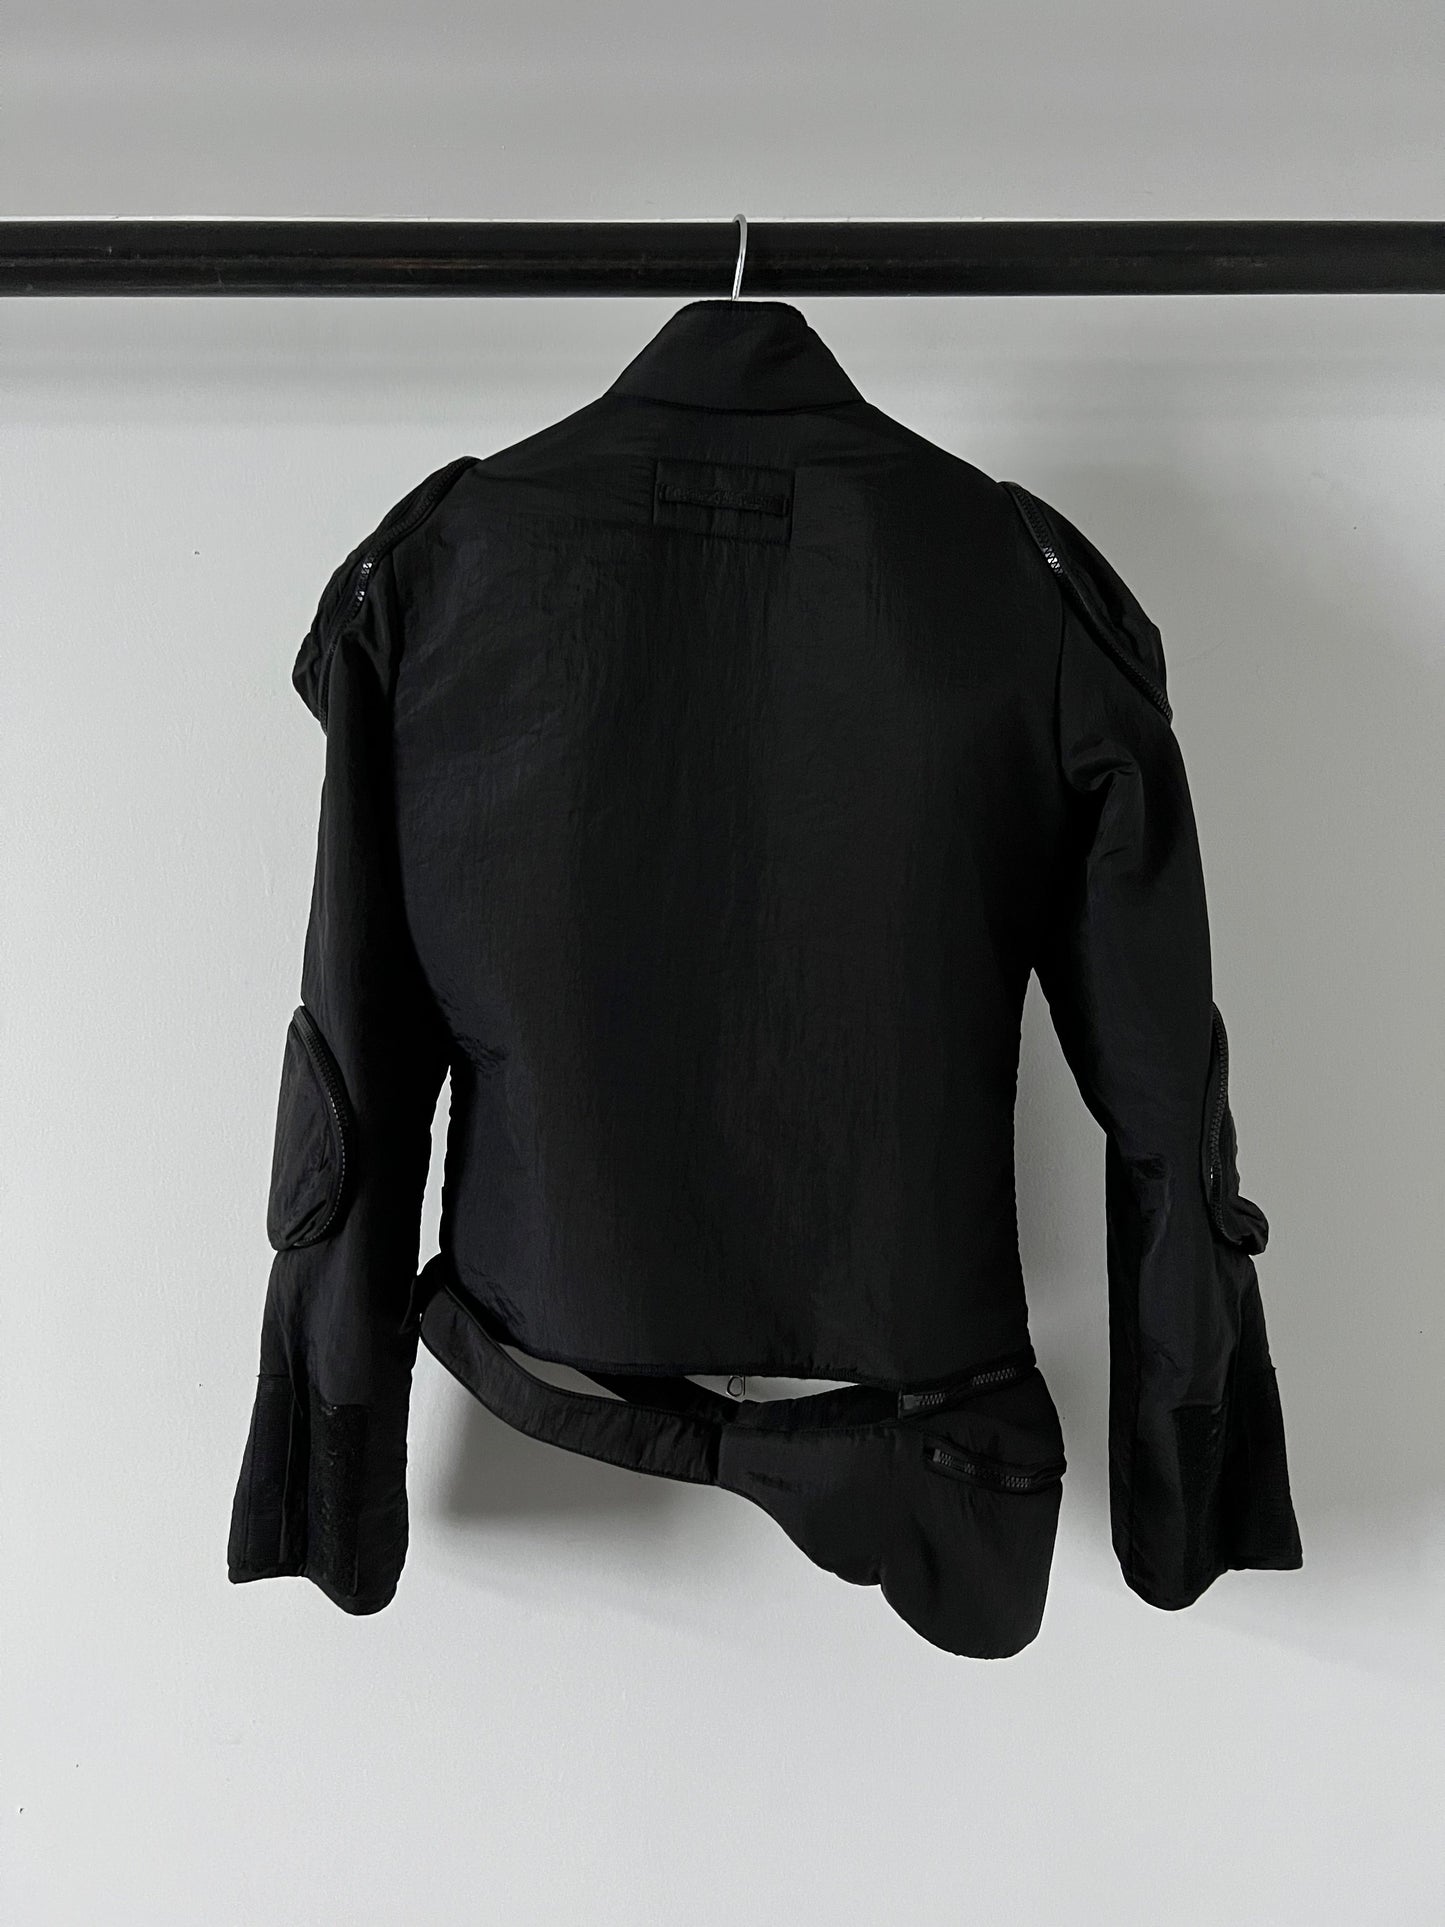 Jean Paul Gaultier Modular Jacket